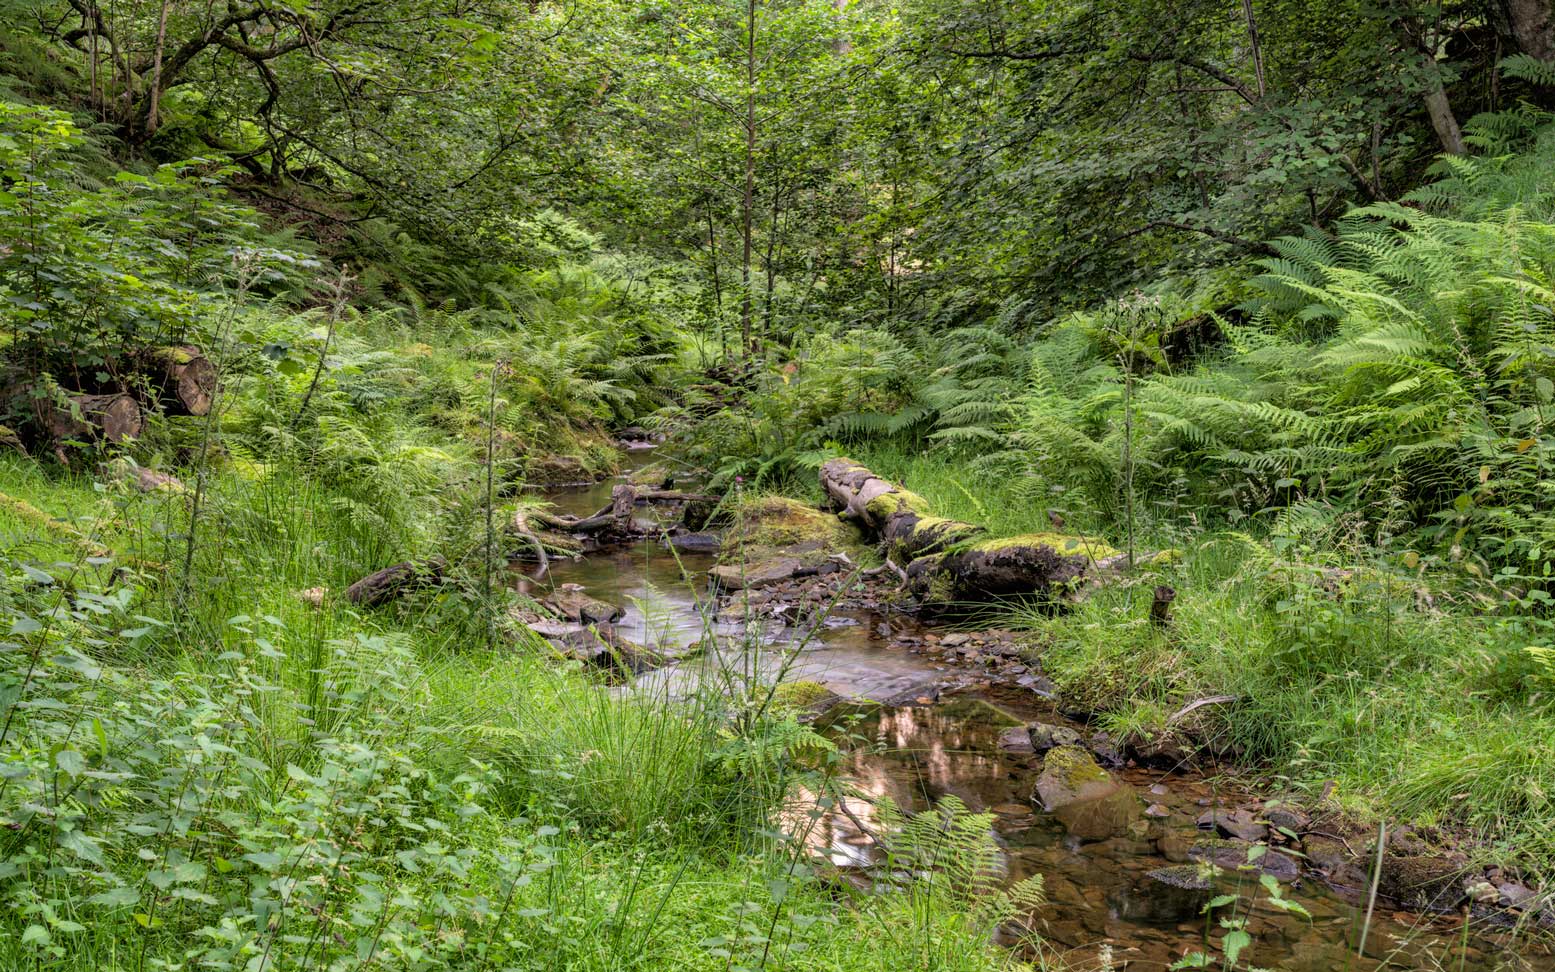 Dense vegetation along a small stream. Credit Lizzie Shepherd.